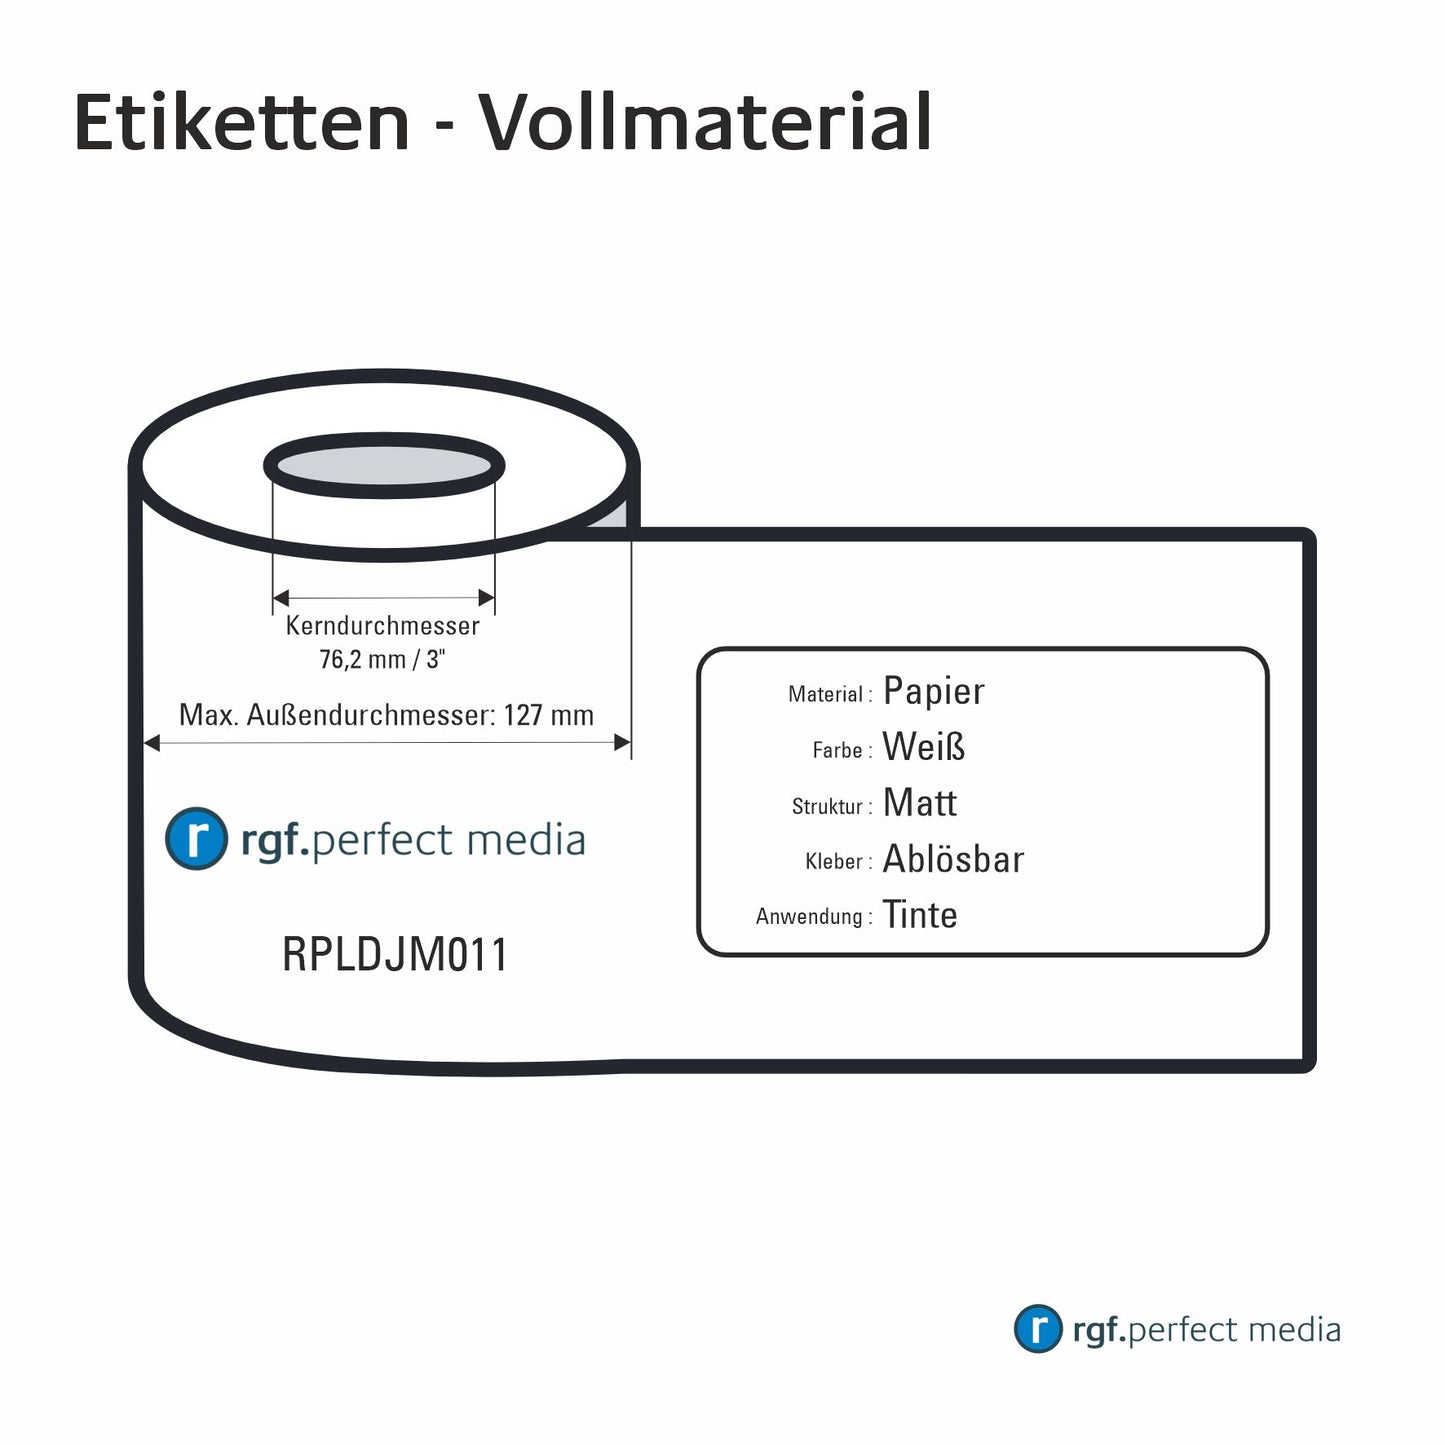 RPLDJM011 - Papier-Etiketten, Weiß, Matt, Ablösbar, Tinte / Inkjet - Vollmaterial 130mm